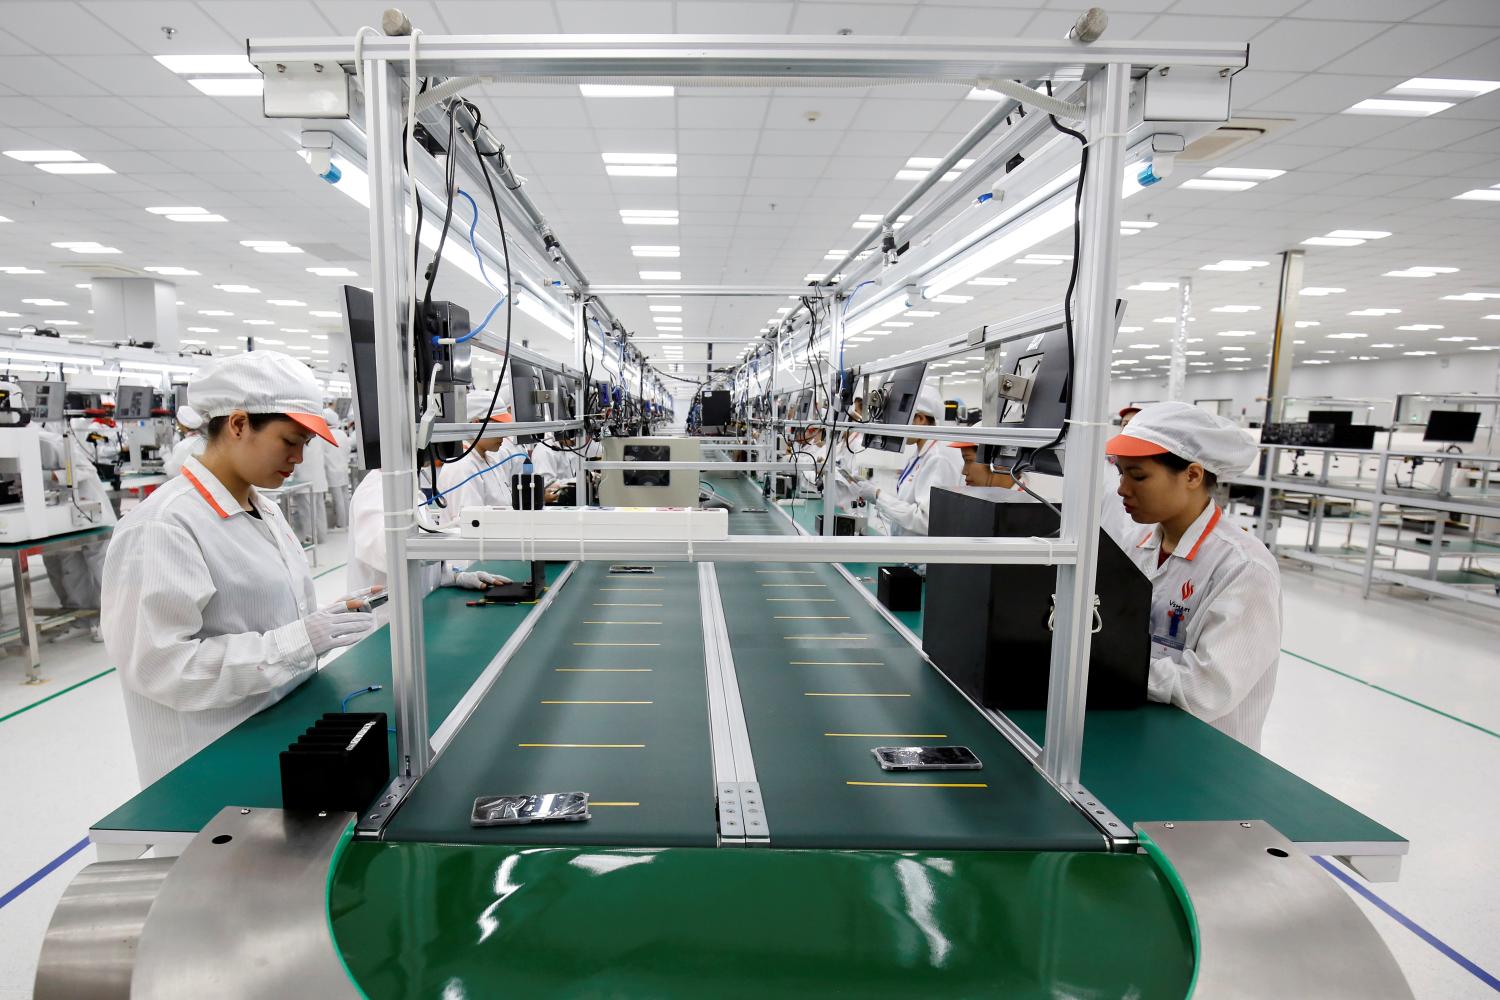 Manufacturers work at an assembly line of Vingroup's Vsmart phone in Hai Phong,Vietnam December 4, 2018. REUTERS/Kham - RC16DDBFE340